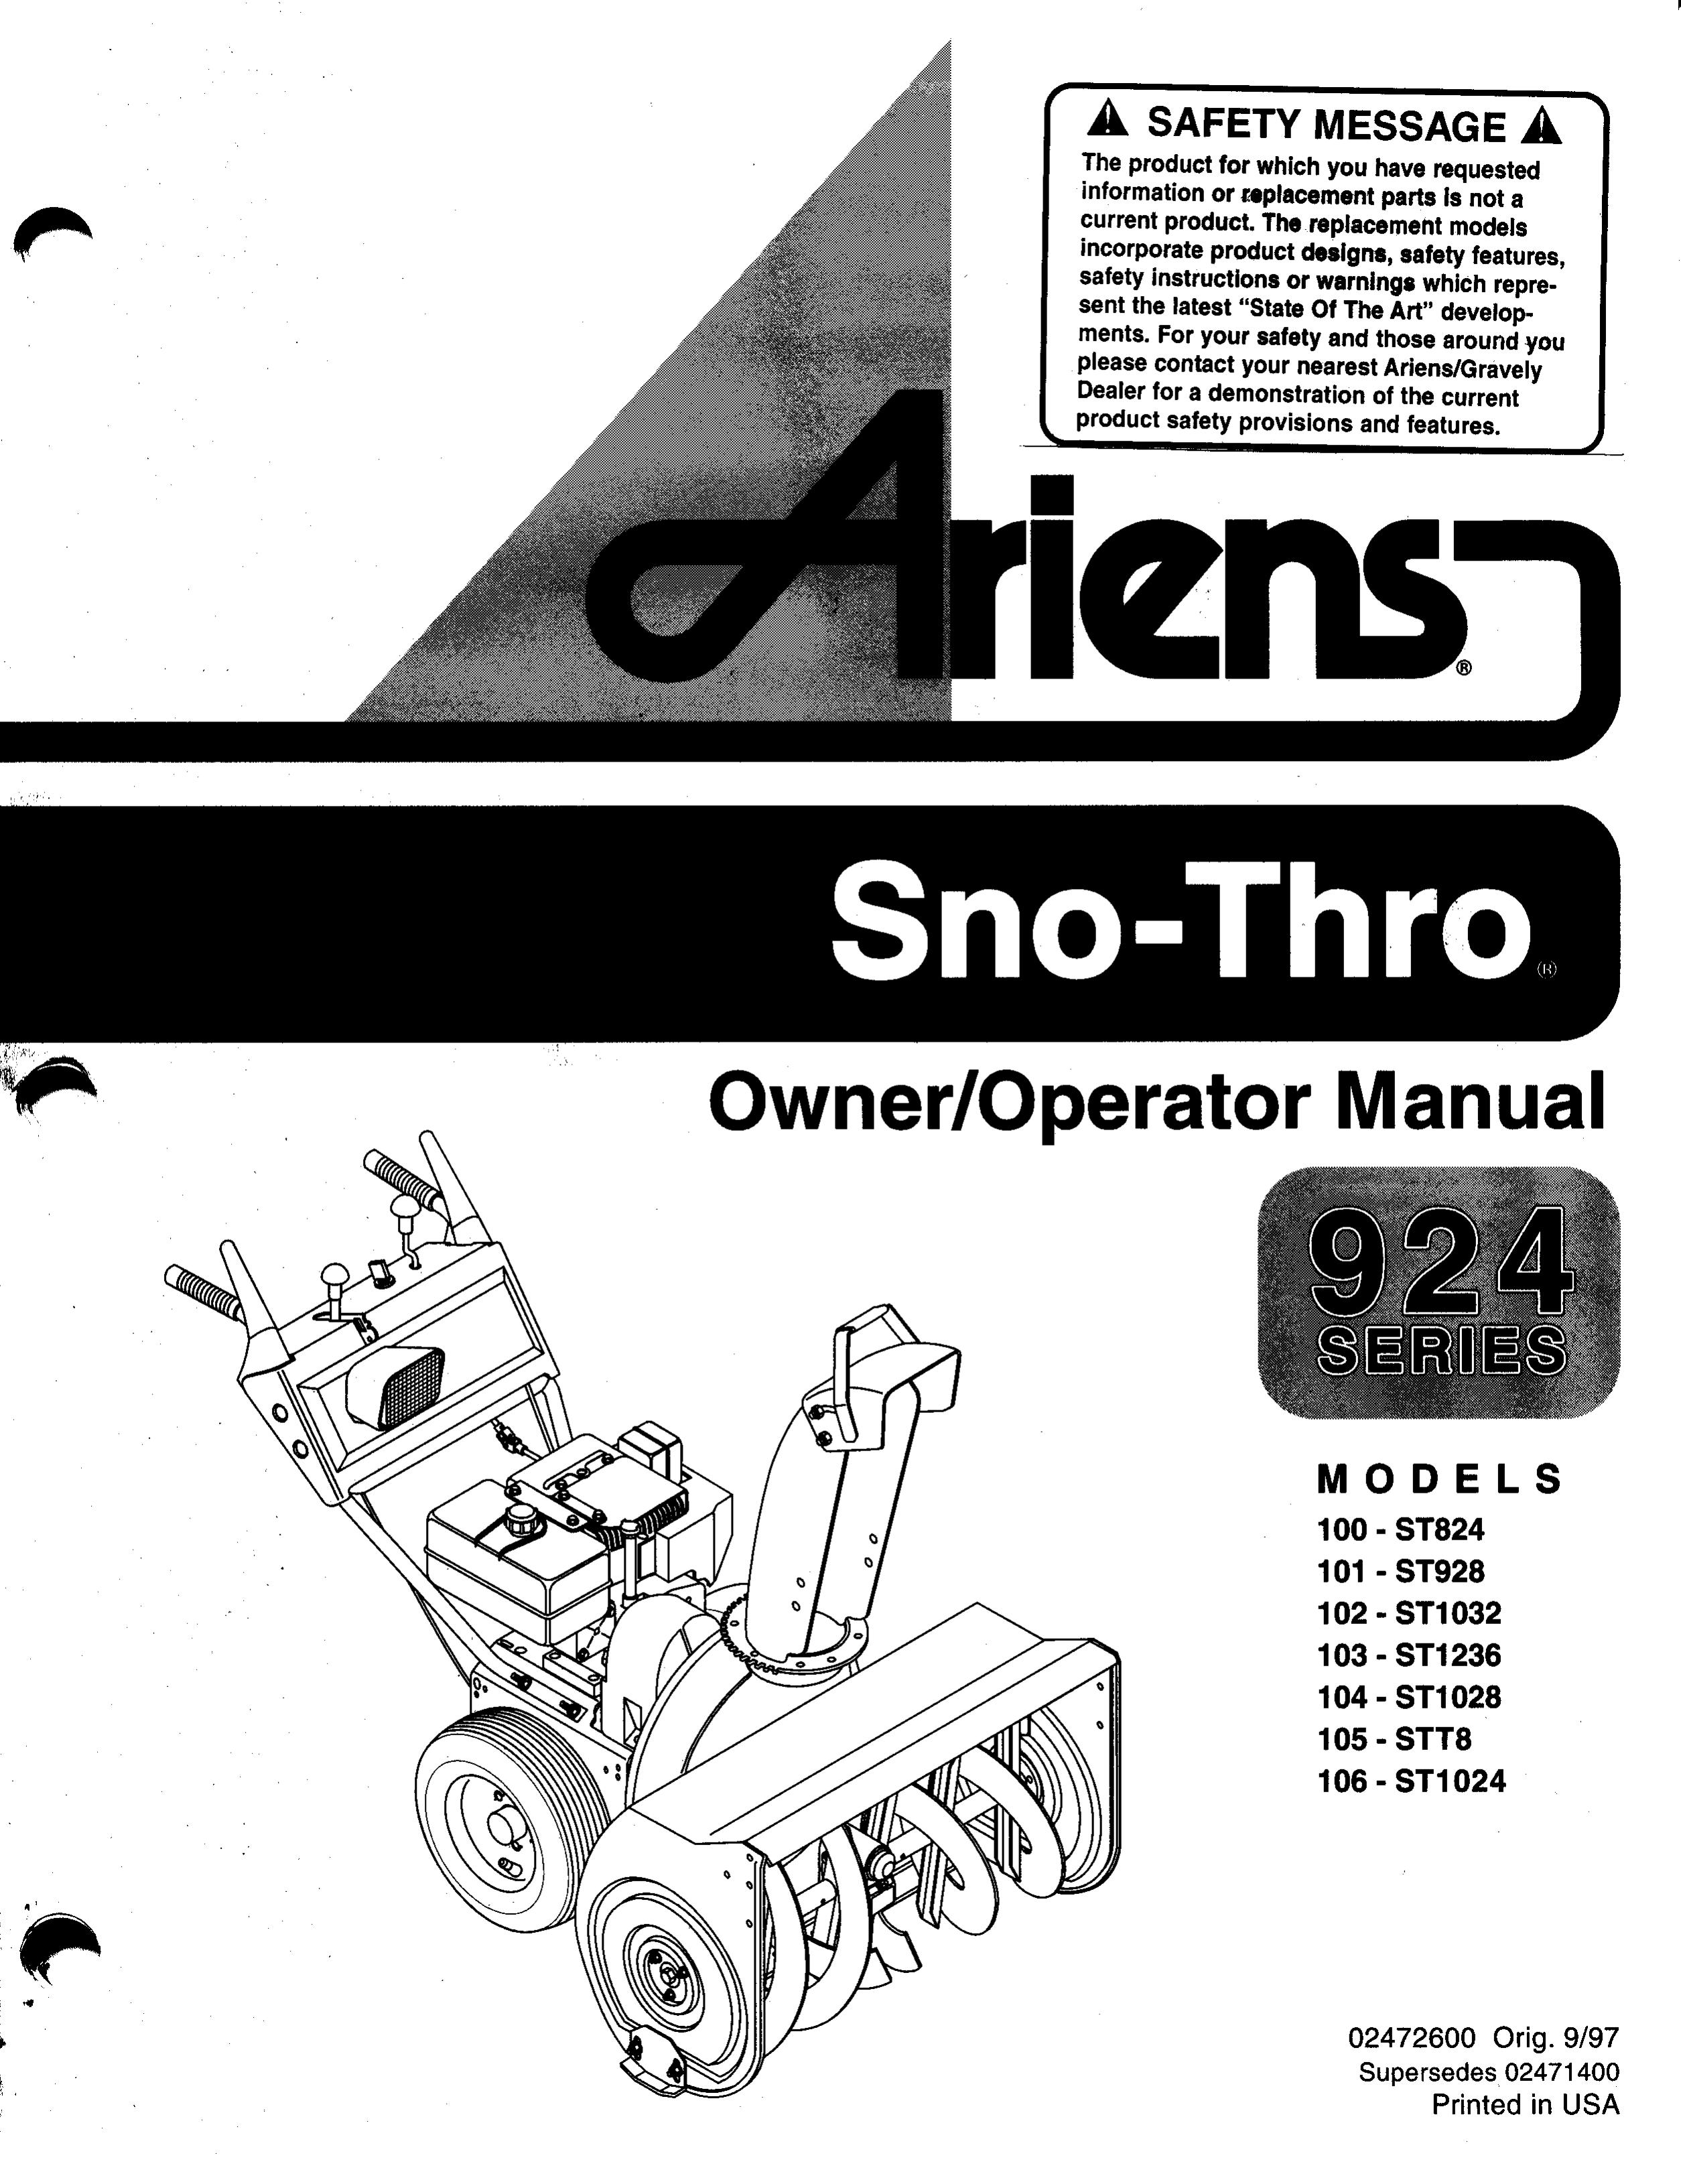 Ariens 106-ST1024 Snow Blower User Manual